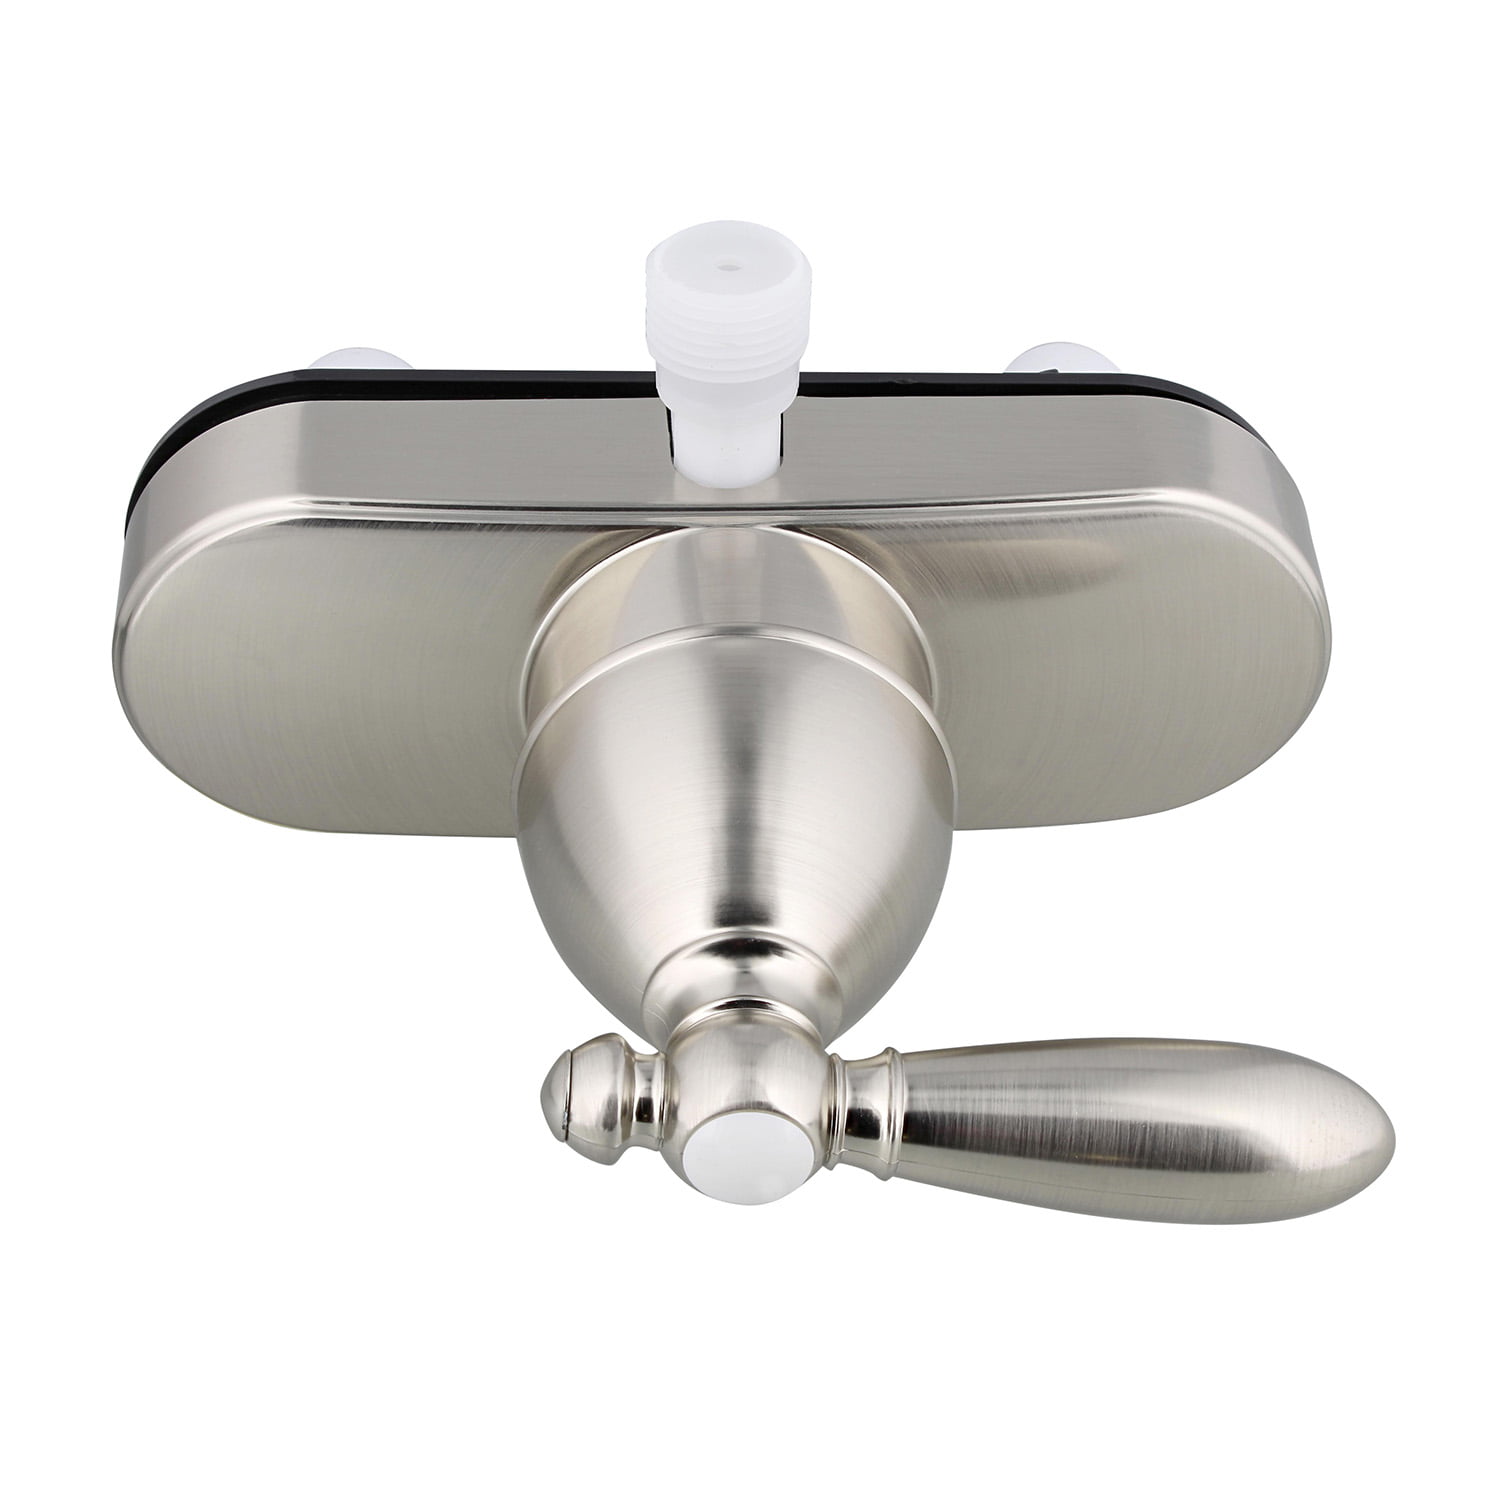 NEW Afeel 4" RV Tub Shower Faucet w/ Diverter & Vacuum Breaker N1015S-09 Bisque 